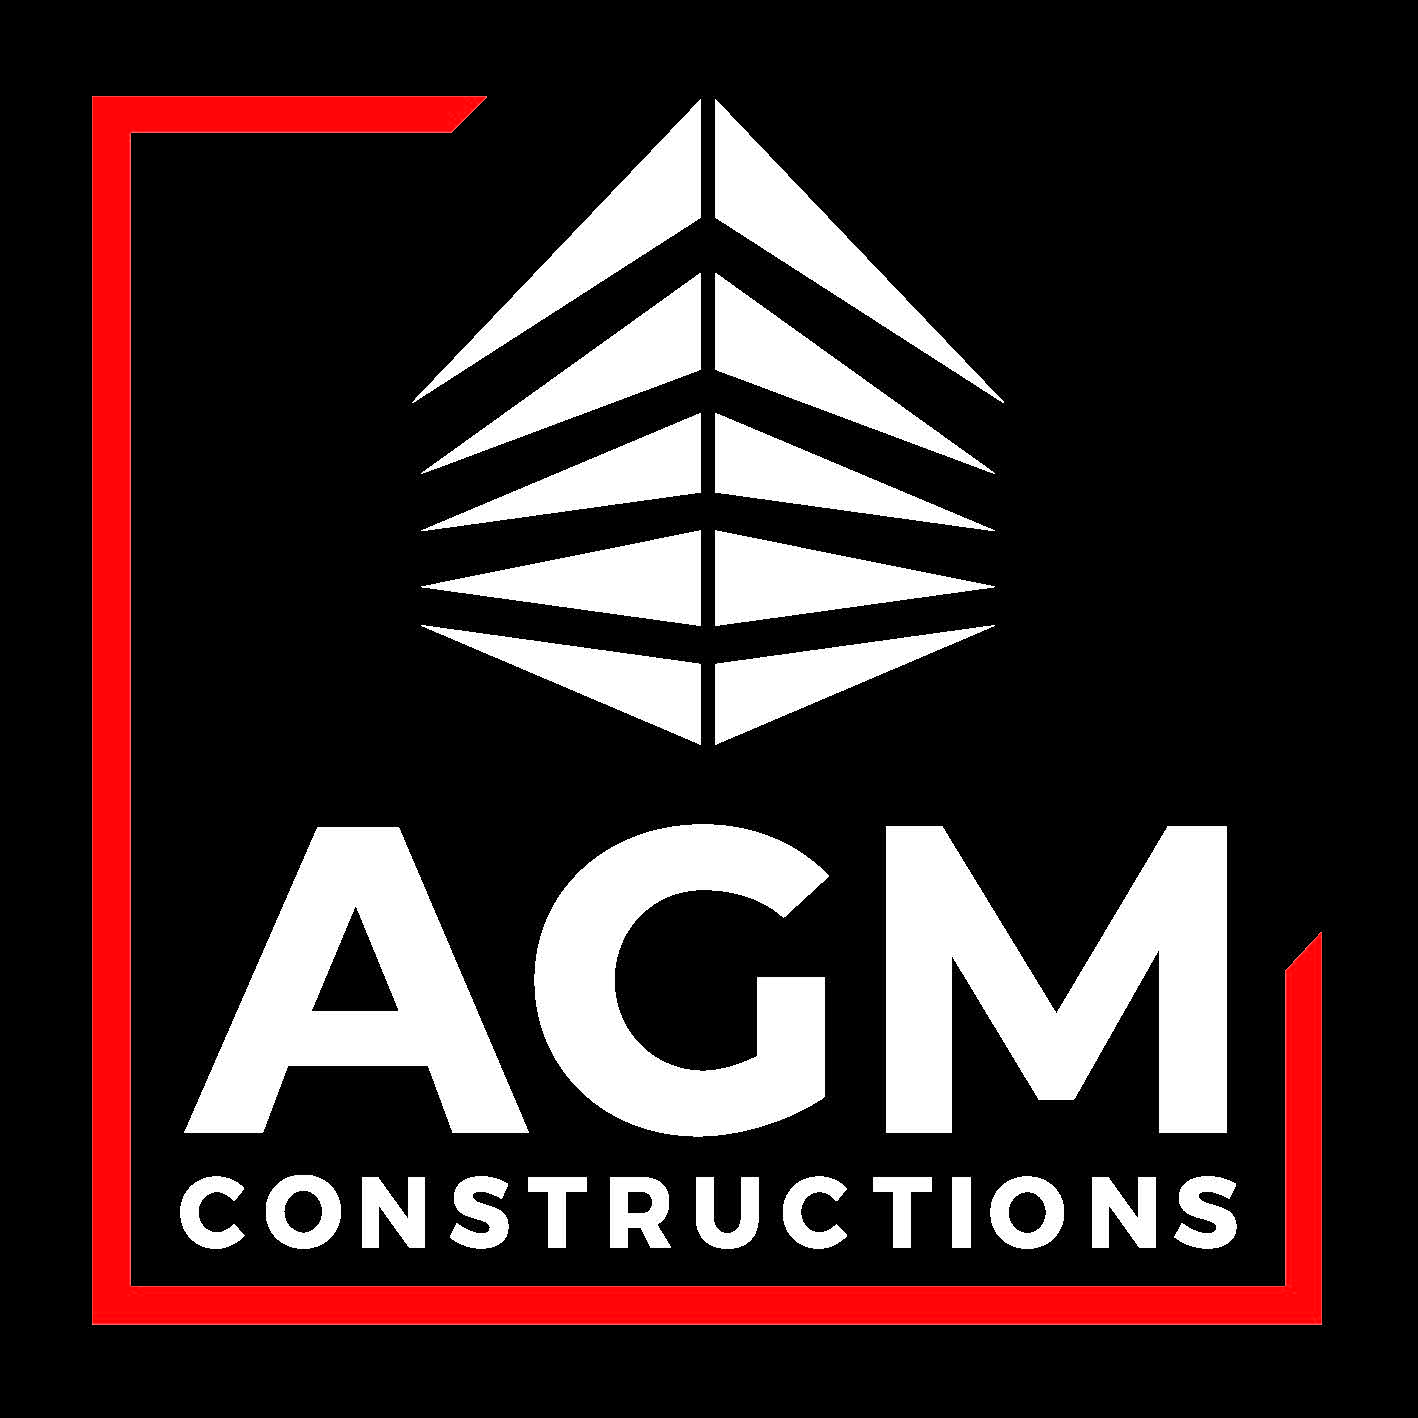 AGM_CONSTRUCTIONS_002.jpg